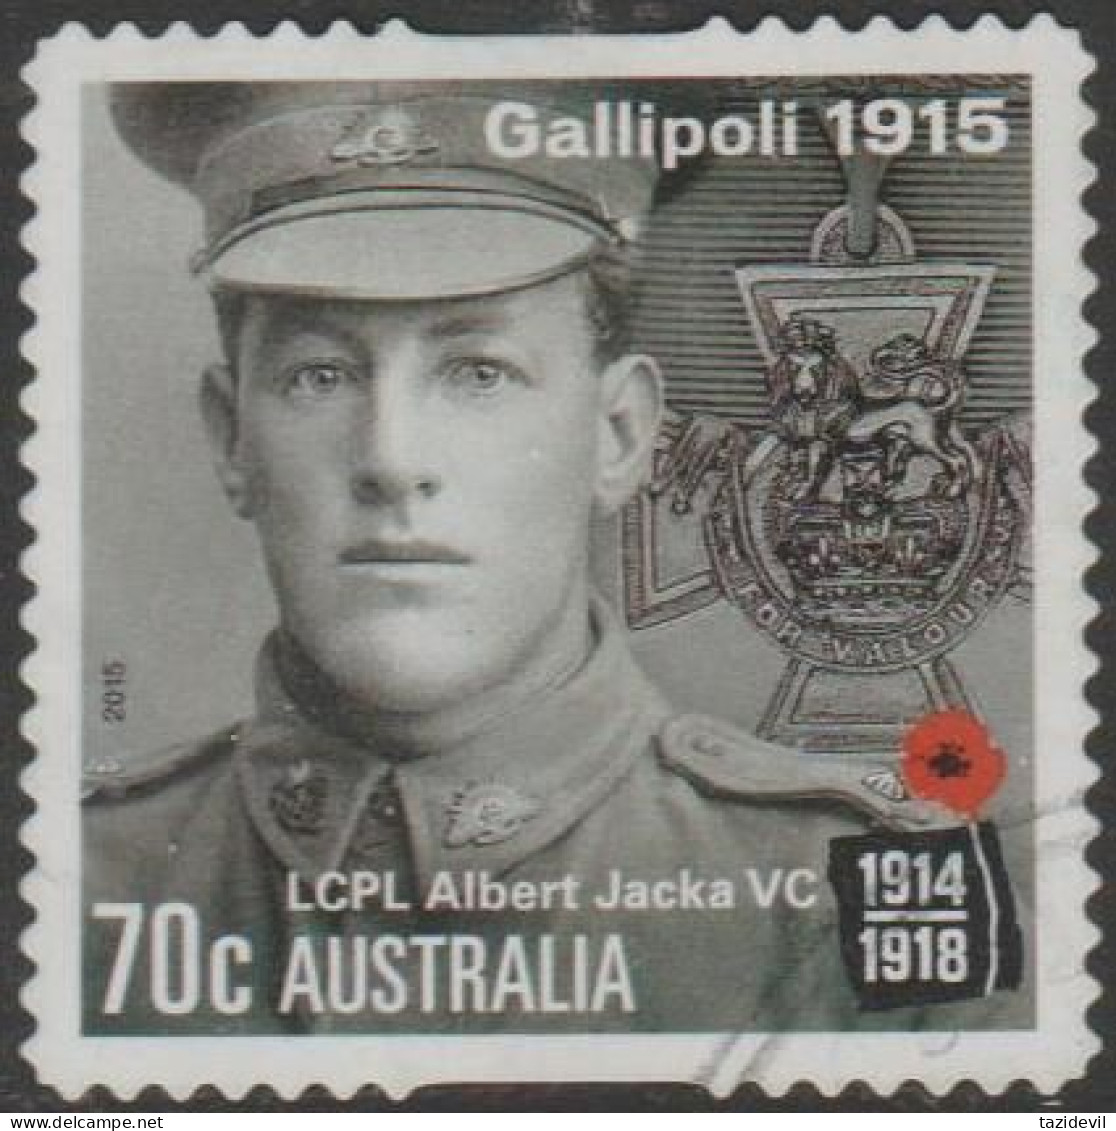 AUSTRALIA - DIE-CUT - USED - 2015 70c Centenary Of WWI 1915: - Gallipoli - LCPL Albert Jacka VC - Soldier - Usados